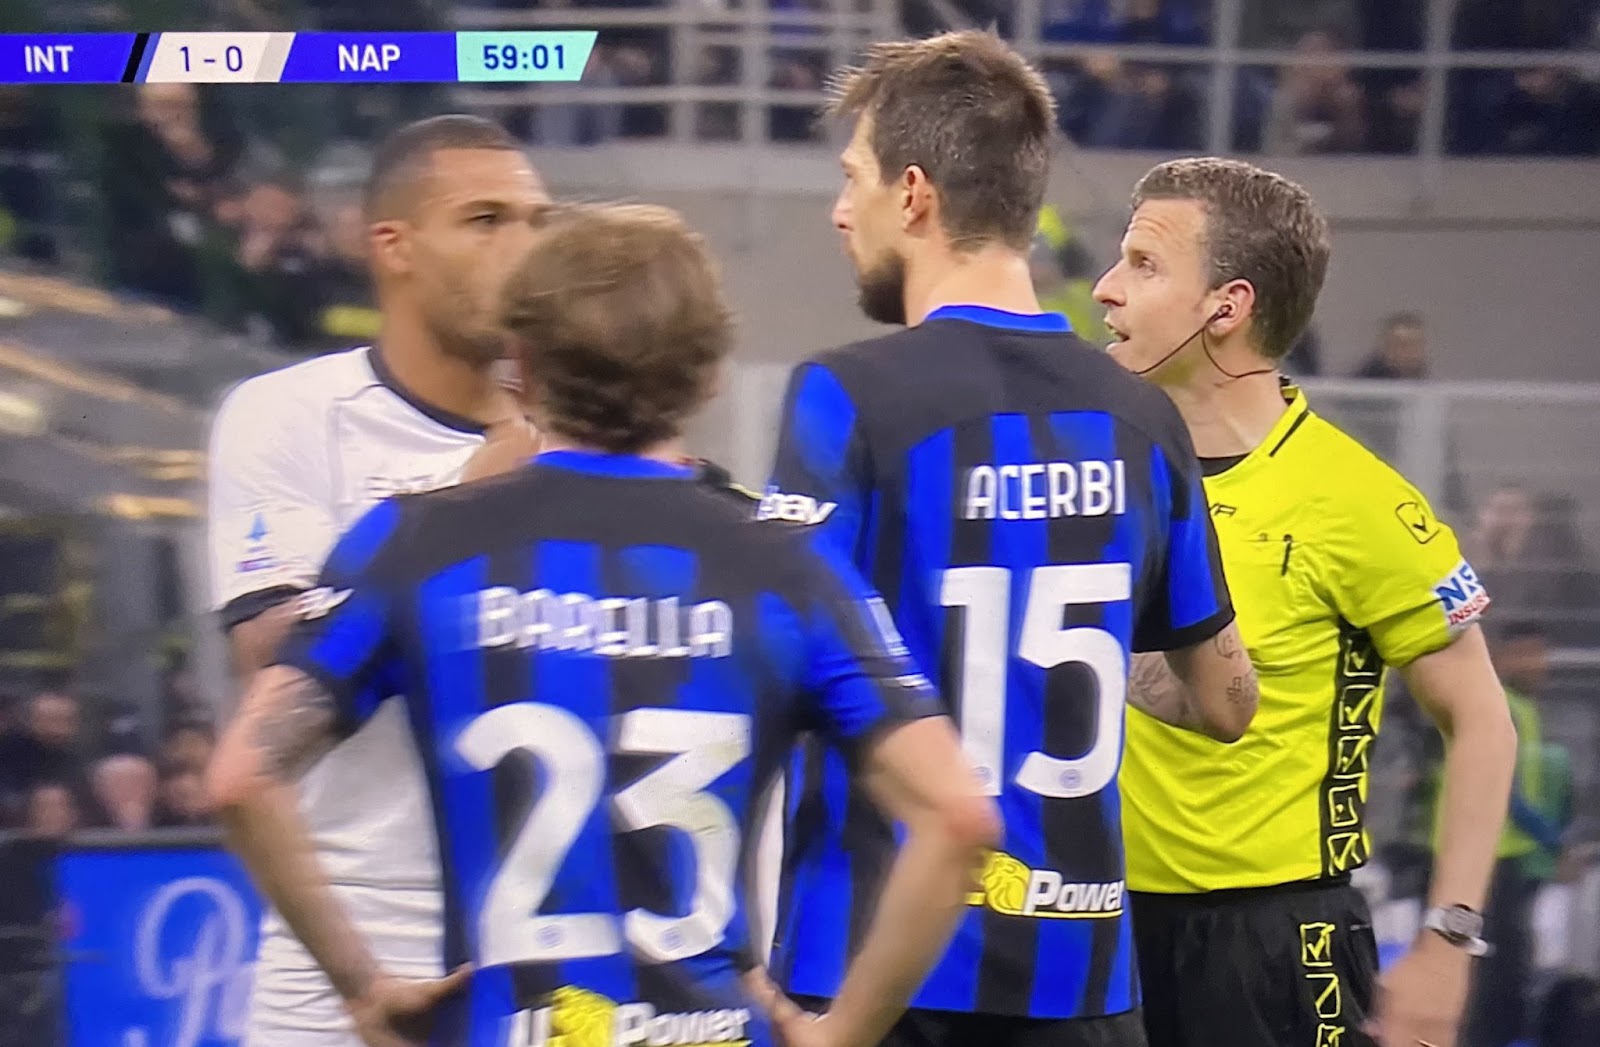 VIDEO Juan Jesus was caught on camera telling the referee